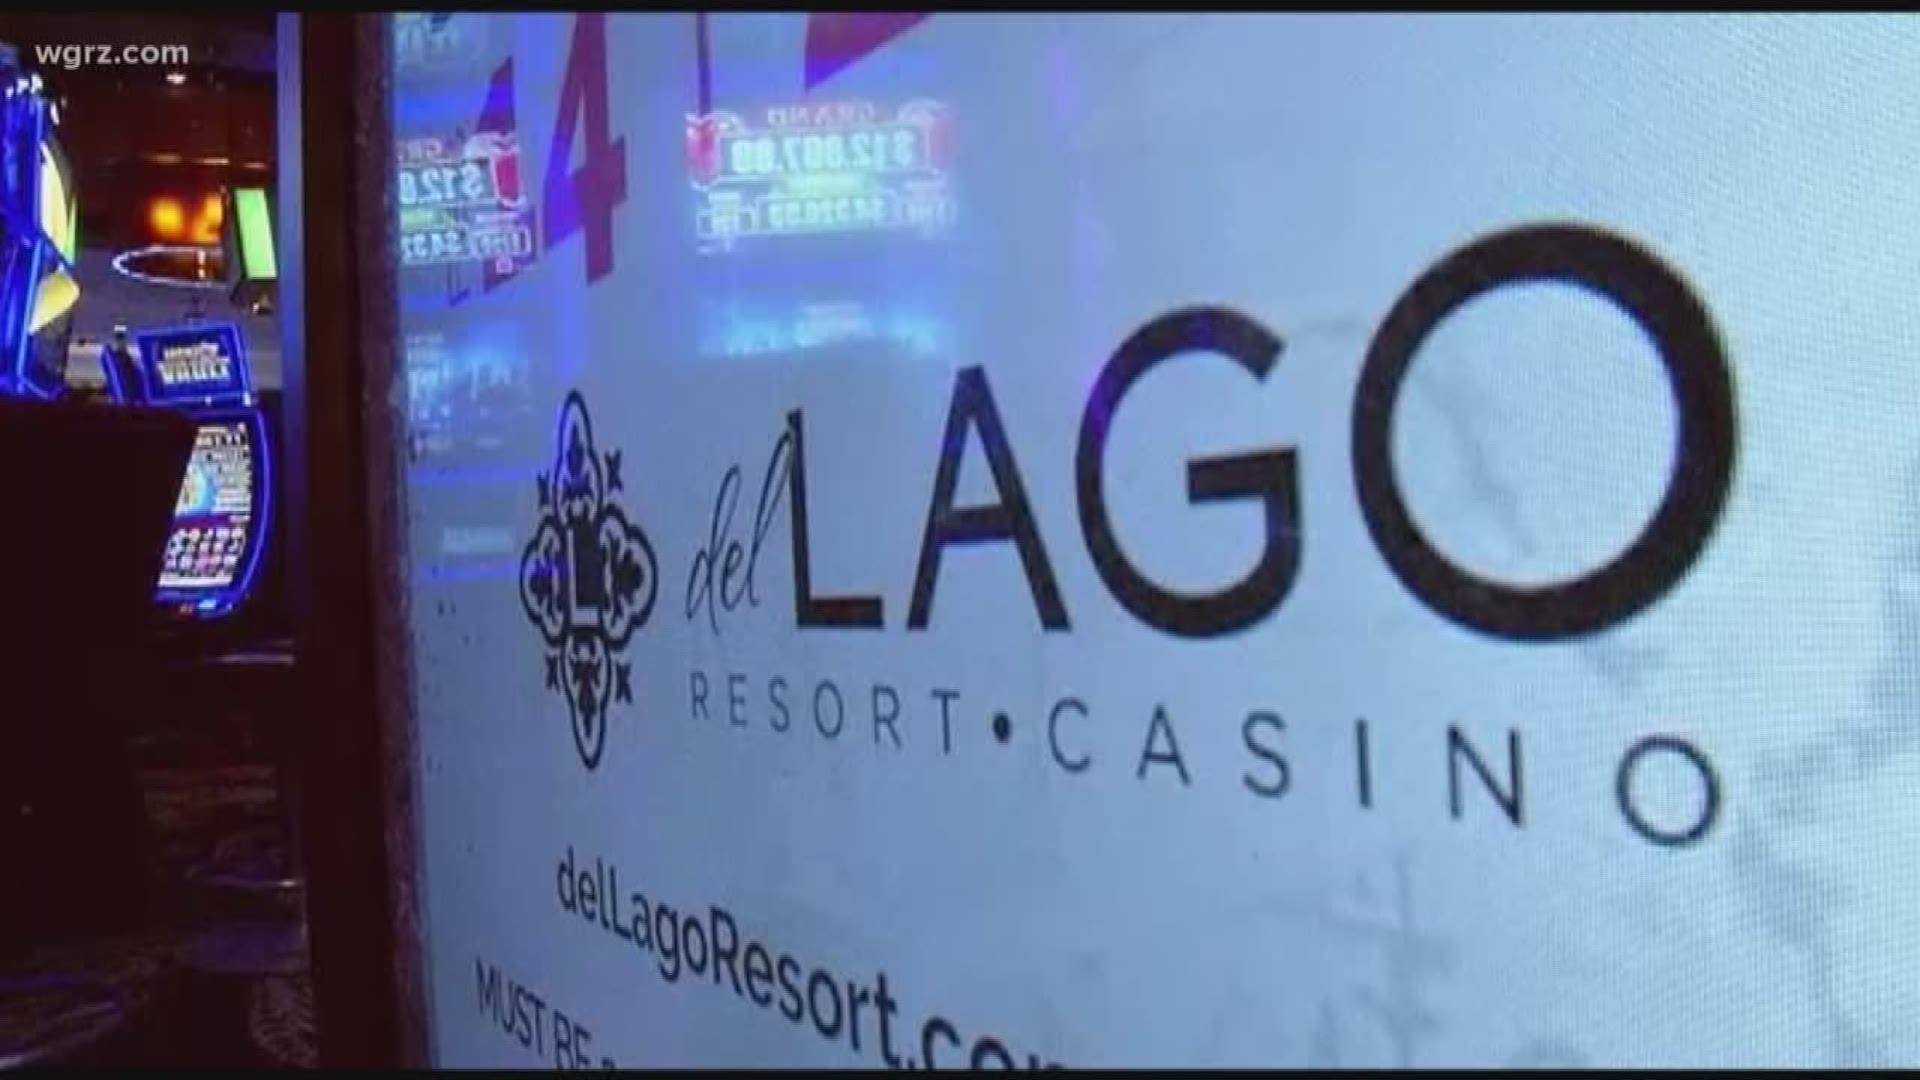 Del Lago casino, struggling with revenue, is seeking a state bailout.